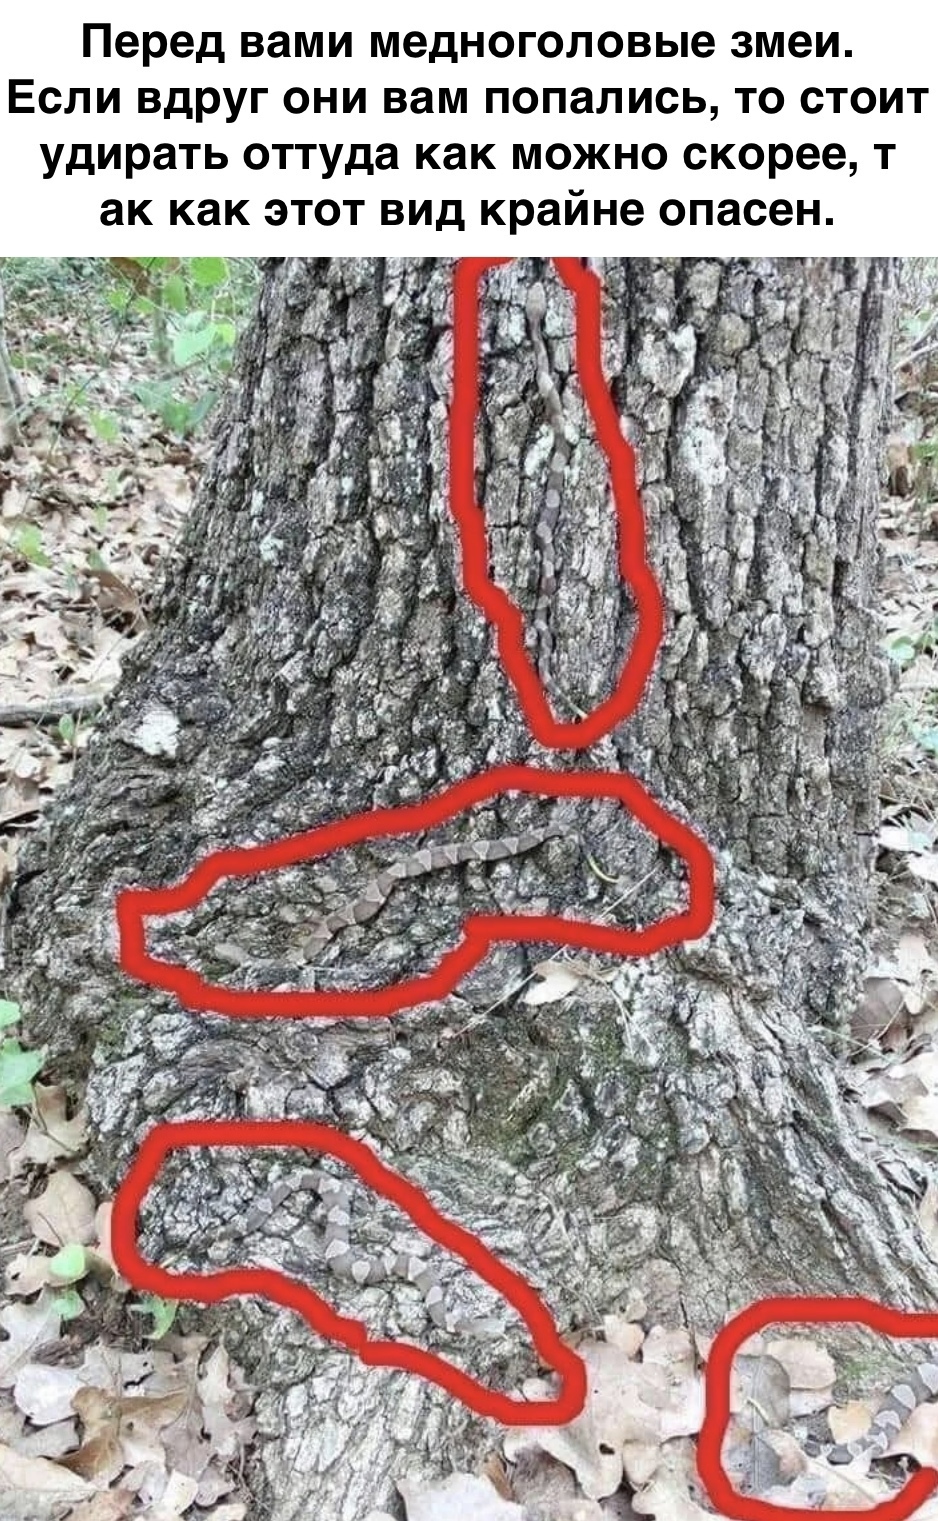 Тест на змей. Змеи на деревьях. Найди змейку на картинке.